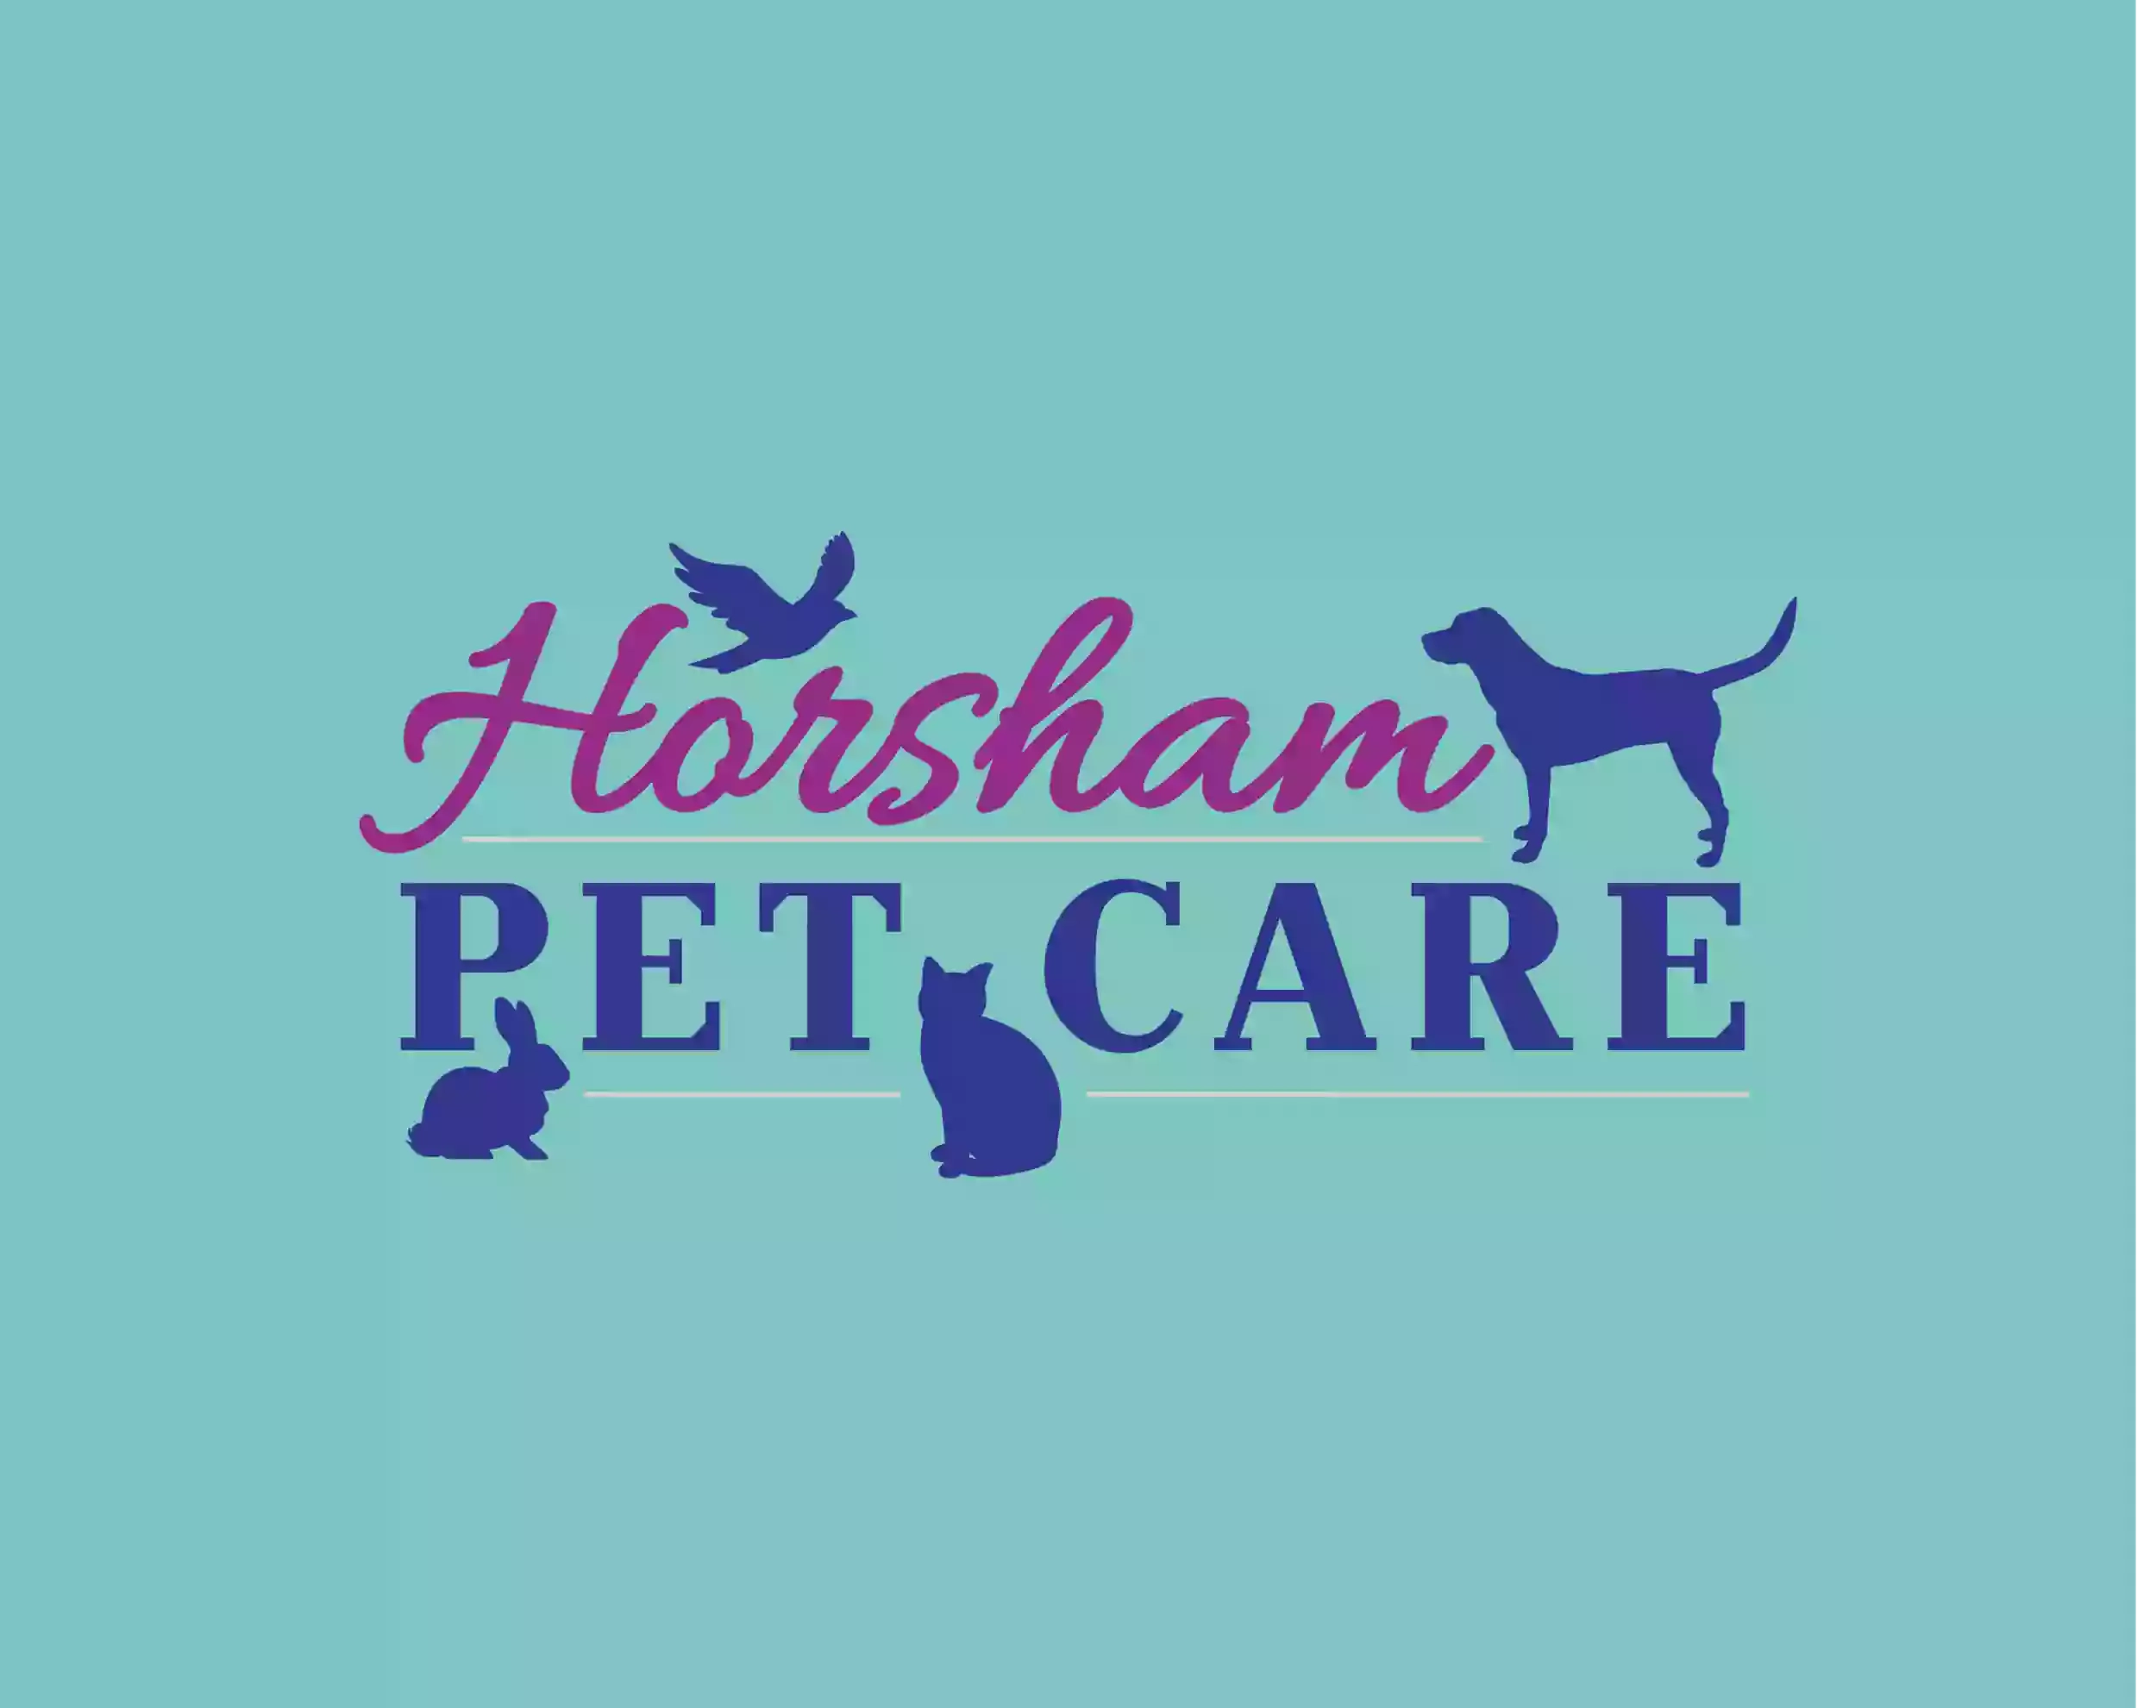 Horsham Pet Care - day care, boarding & walking